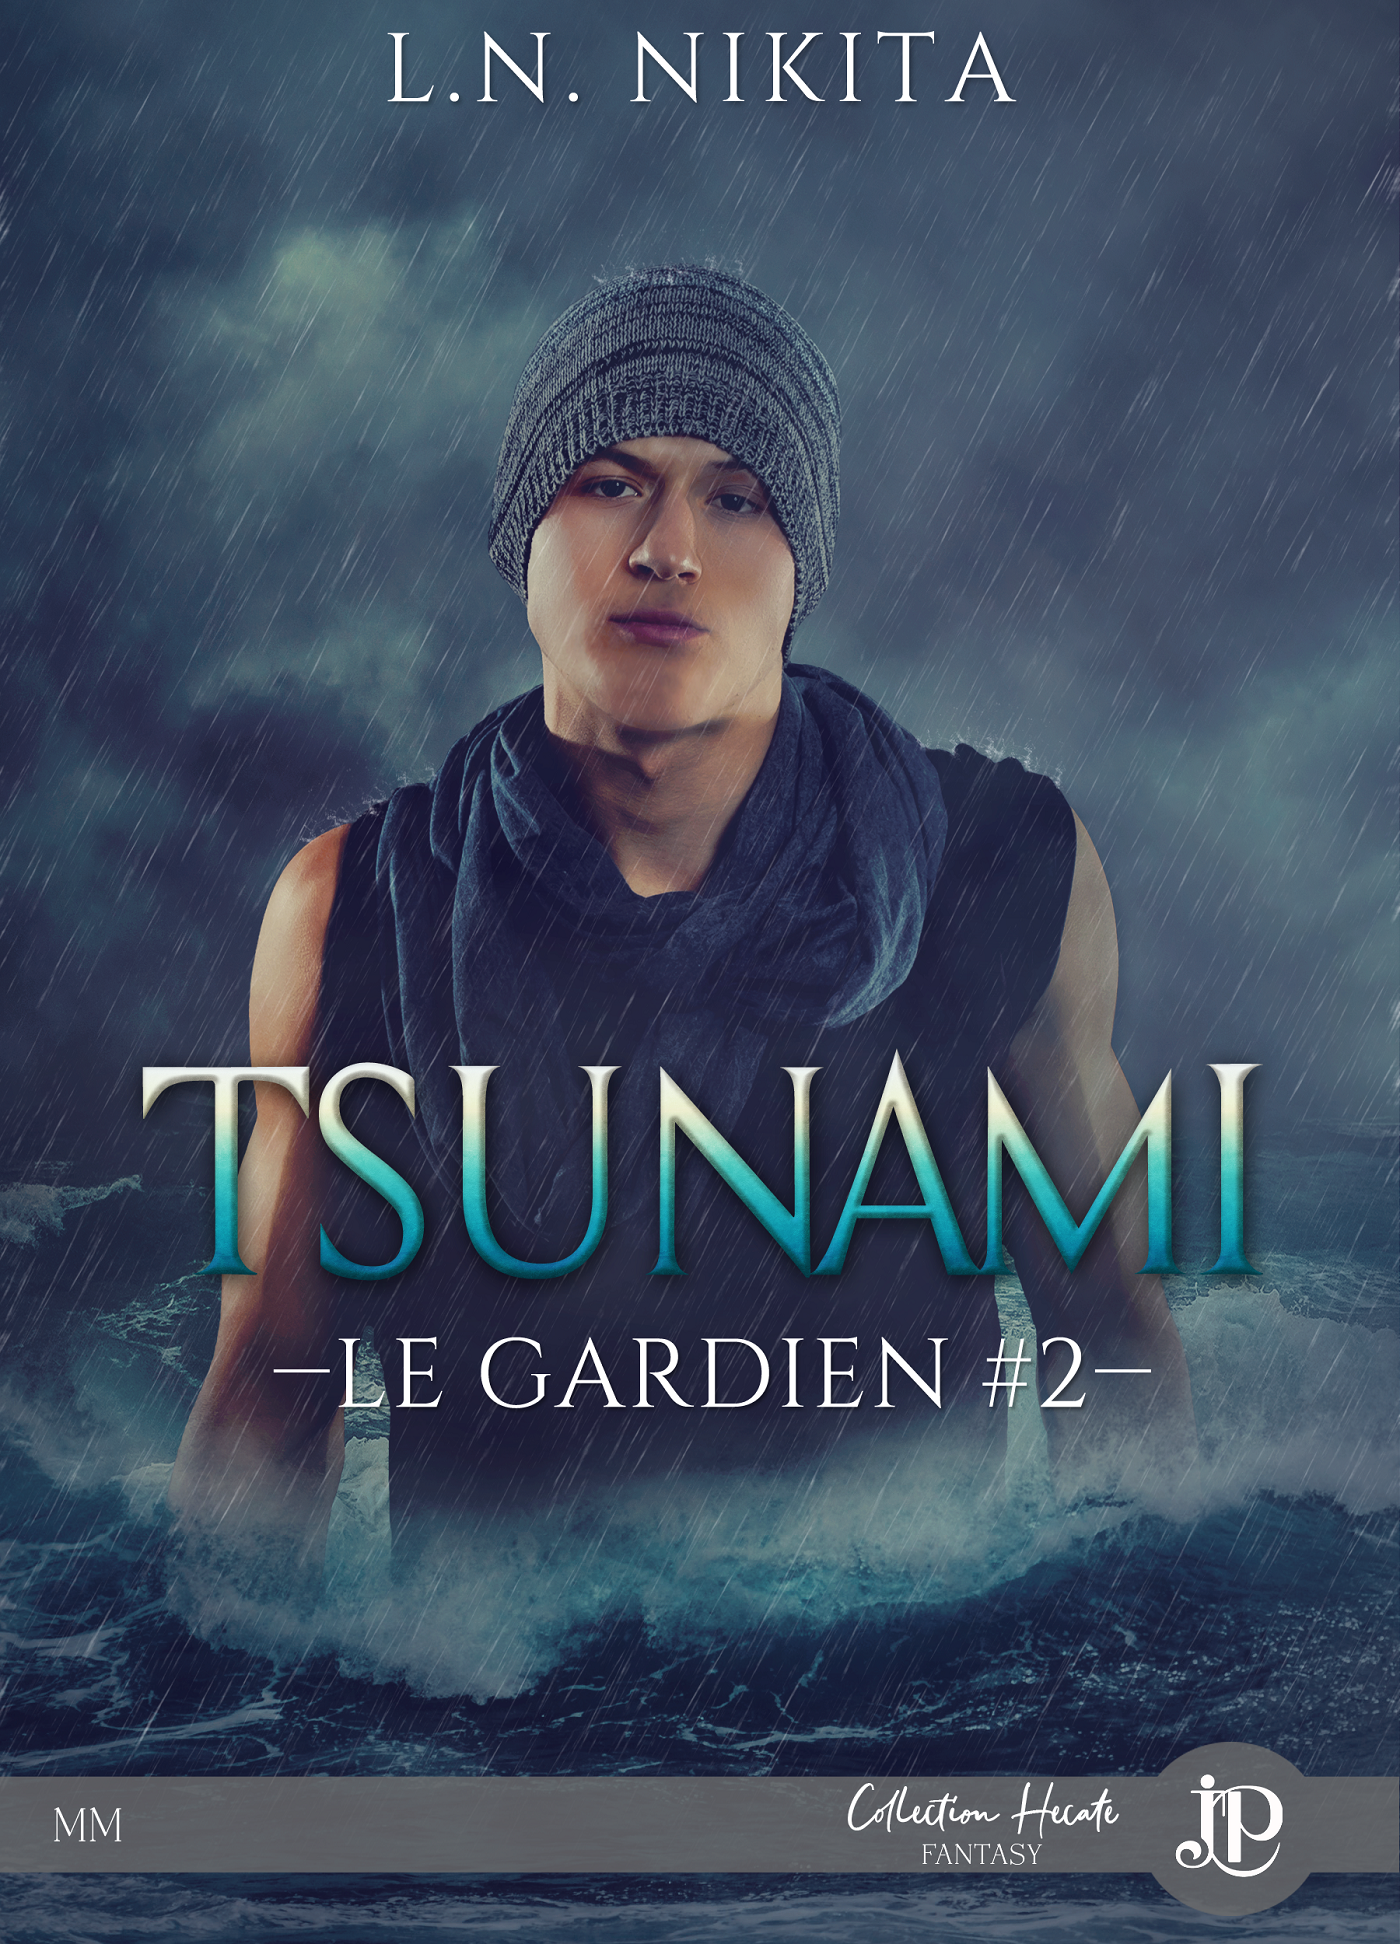 Le gardien #2-Tsunami -